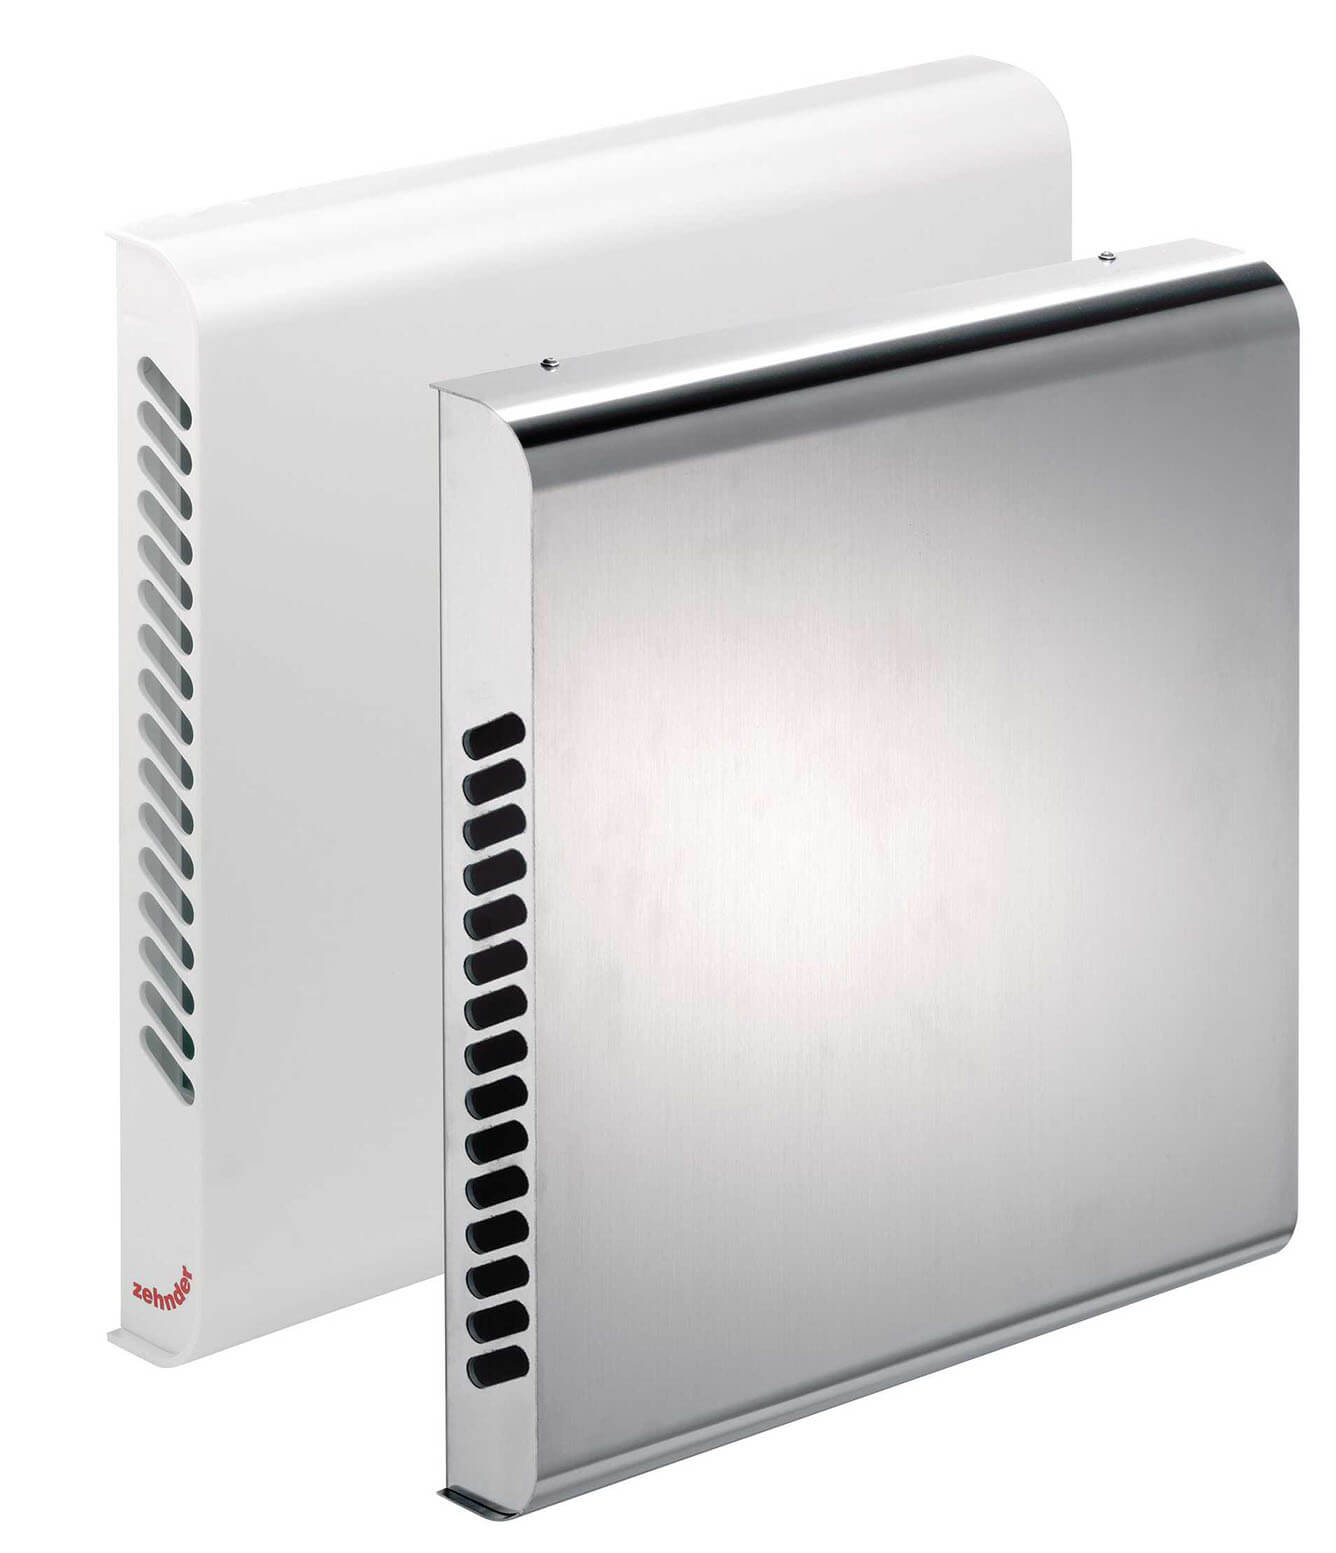 Heat recovery unit Zehnder ComfoSpot 50 front panel